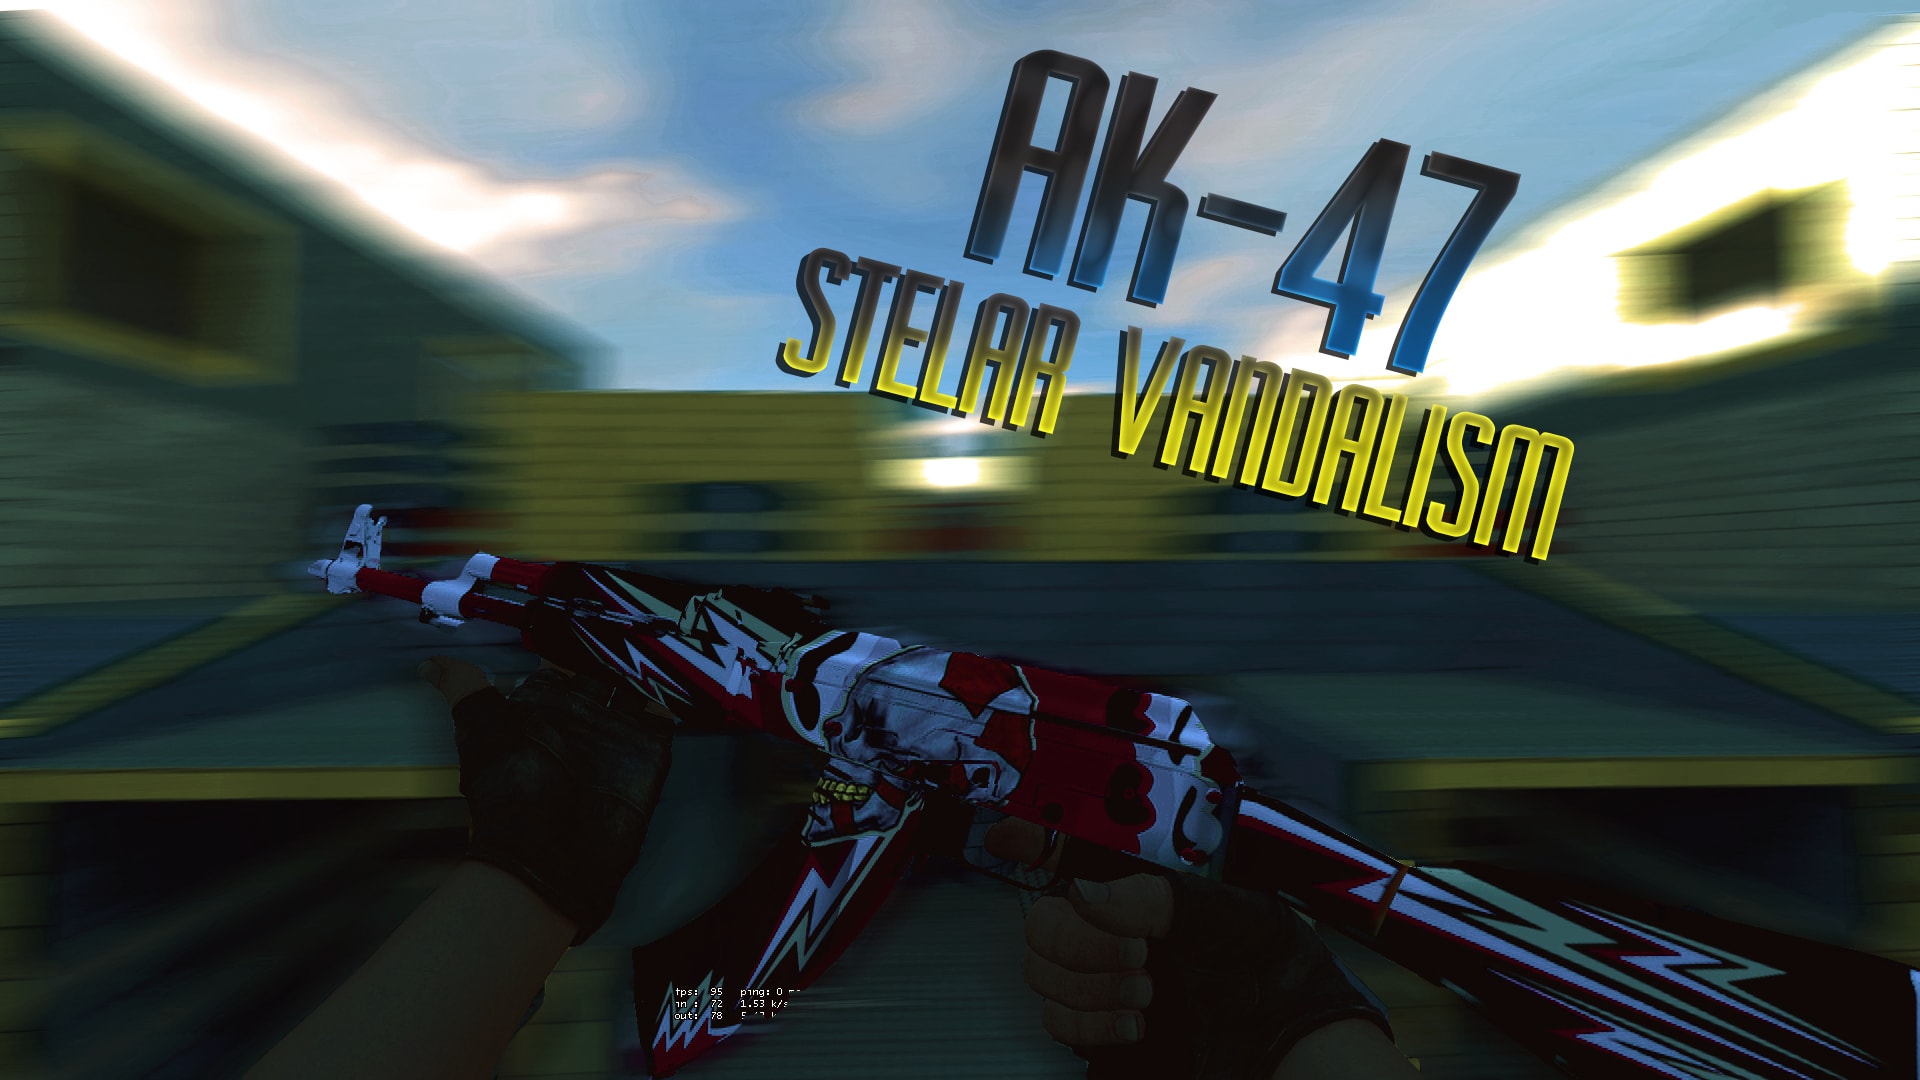 AK-47 | Stelar Vandalism